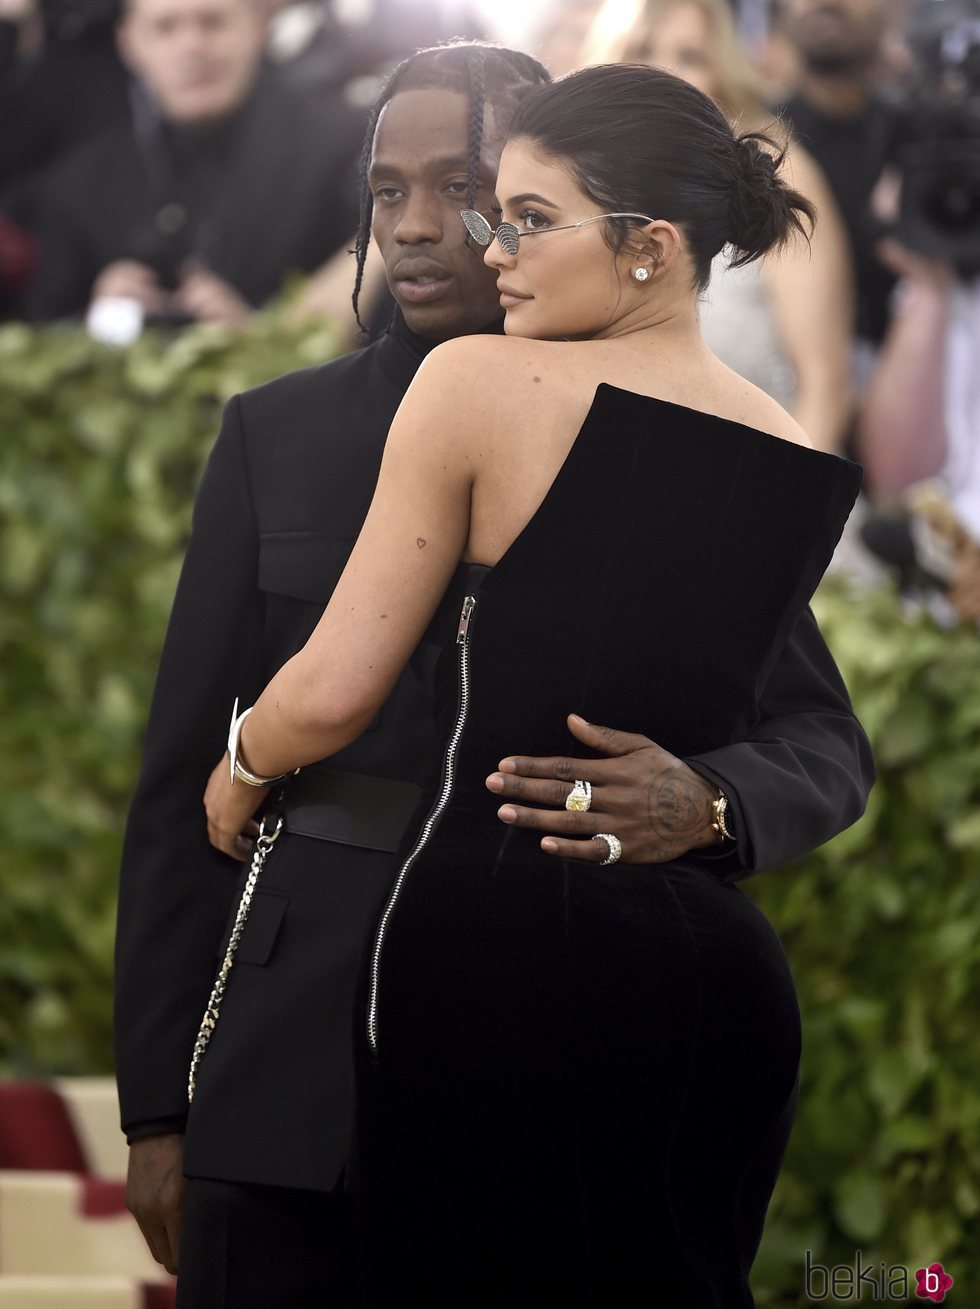 Kylie Jenner y Travis Scott en actitud cariñosa en la alfombra roja de la Gala MET 2018